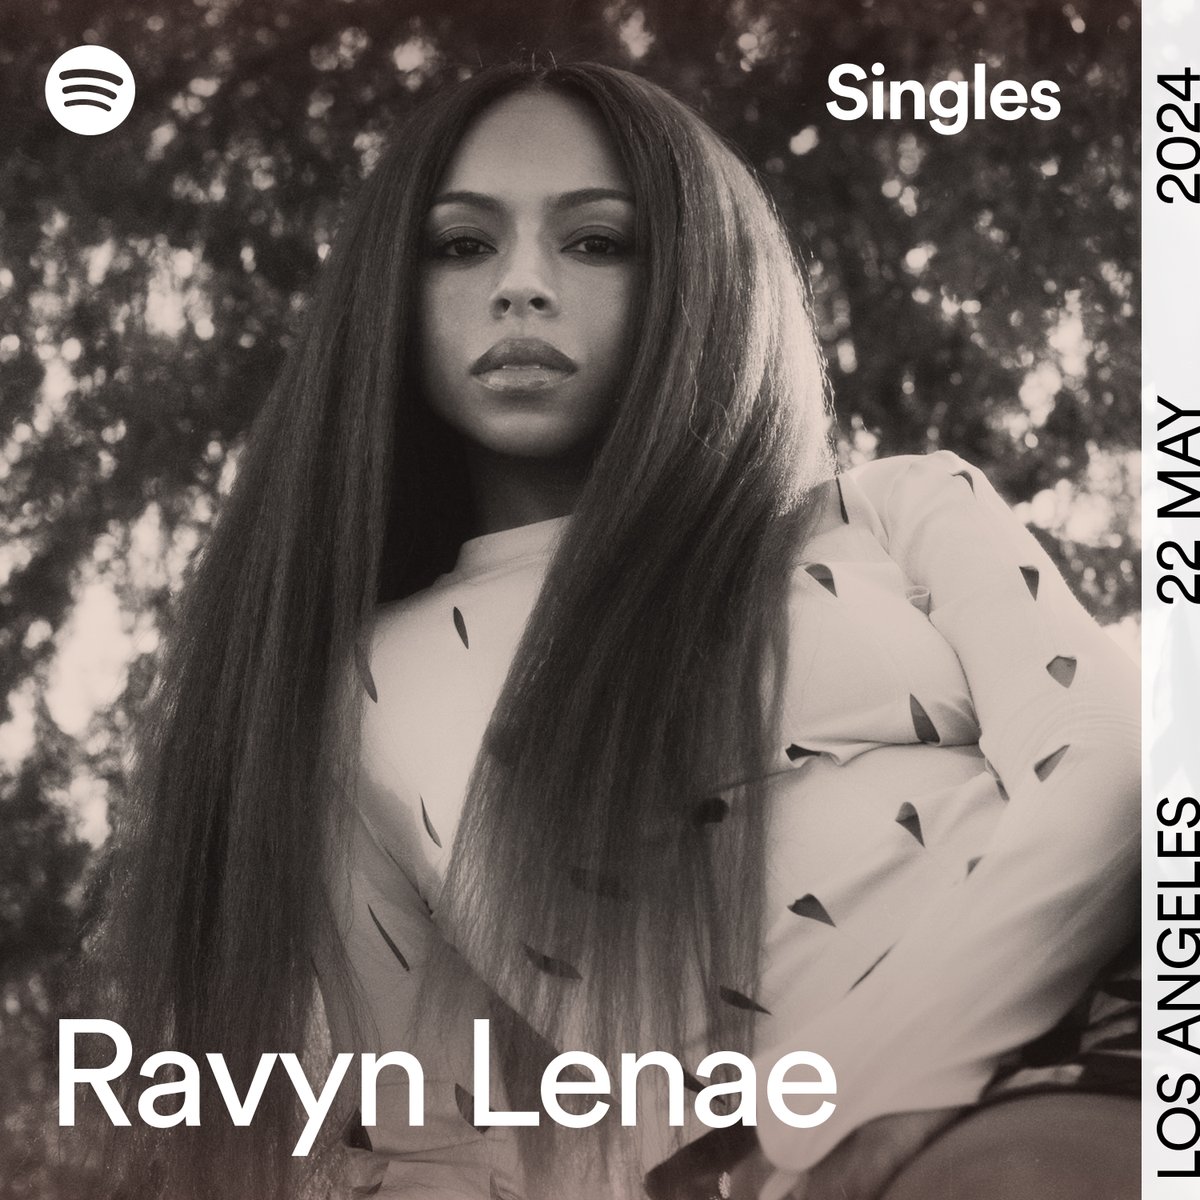 Ravyn Lenae covers Roberta Flack’s ‘Killing Me Softly’ for Spotify singles. 🎵 spotify.link/RavynLenaeSing…